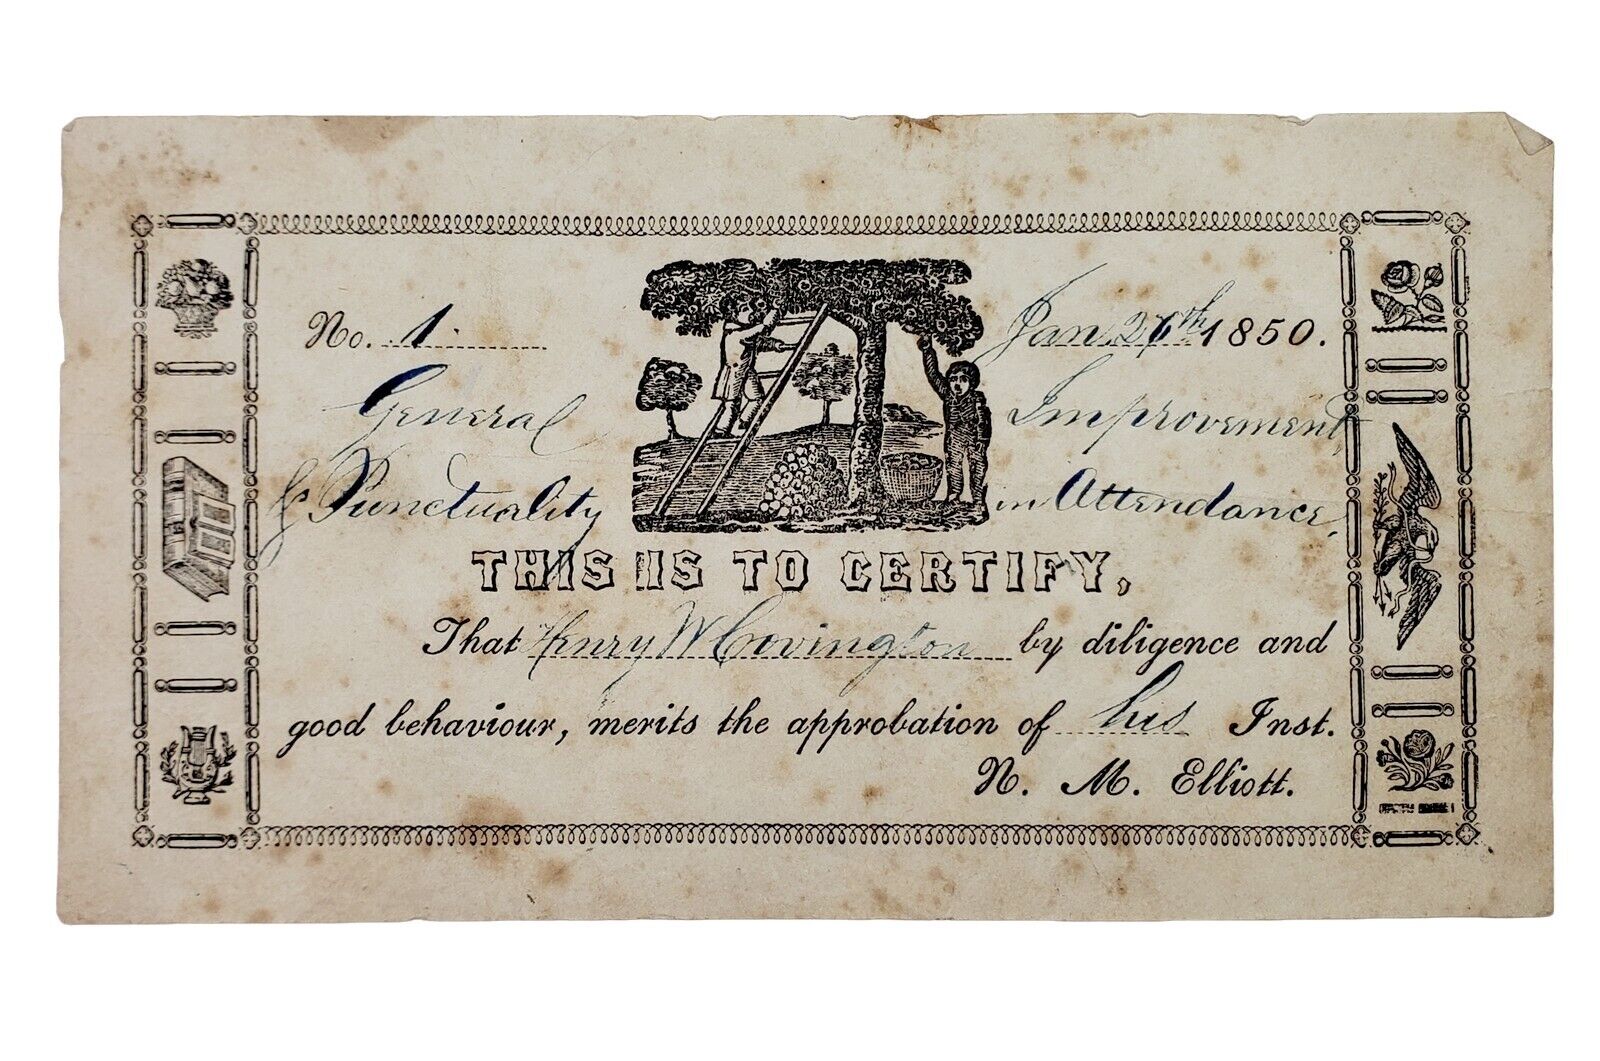 1850 School attendance award certificate - rare Americana, woodcut illustration